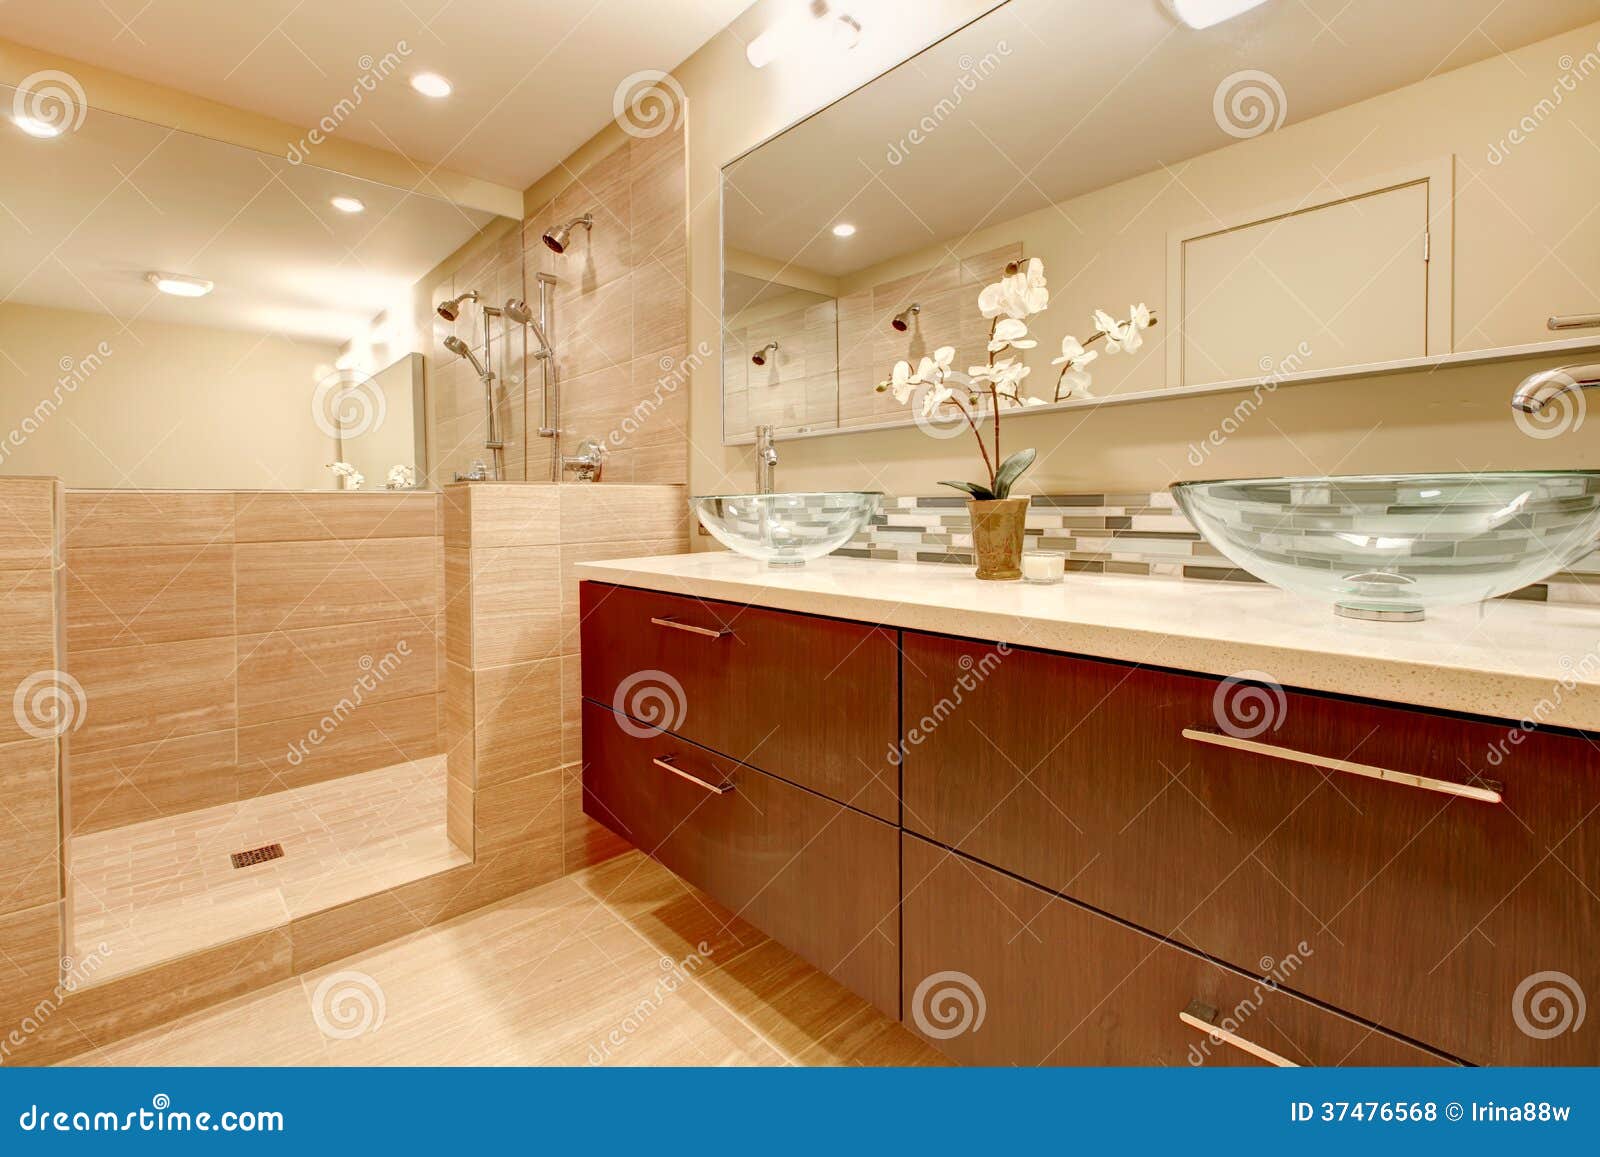 Elegant Bathroom With Glass Vessel Sinks Stock Photo ...